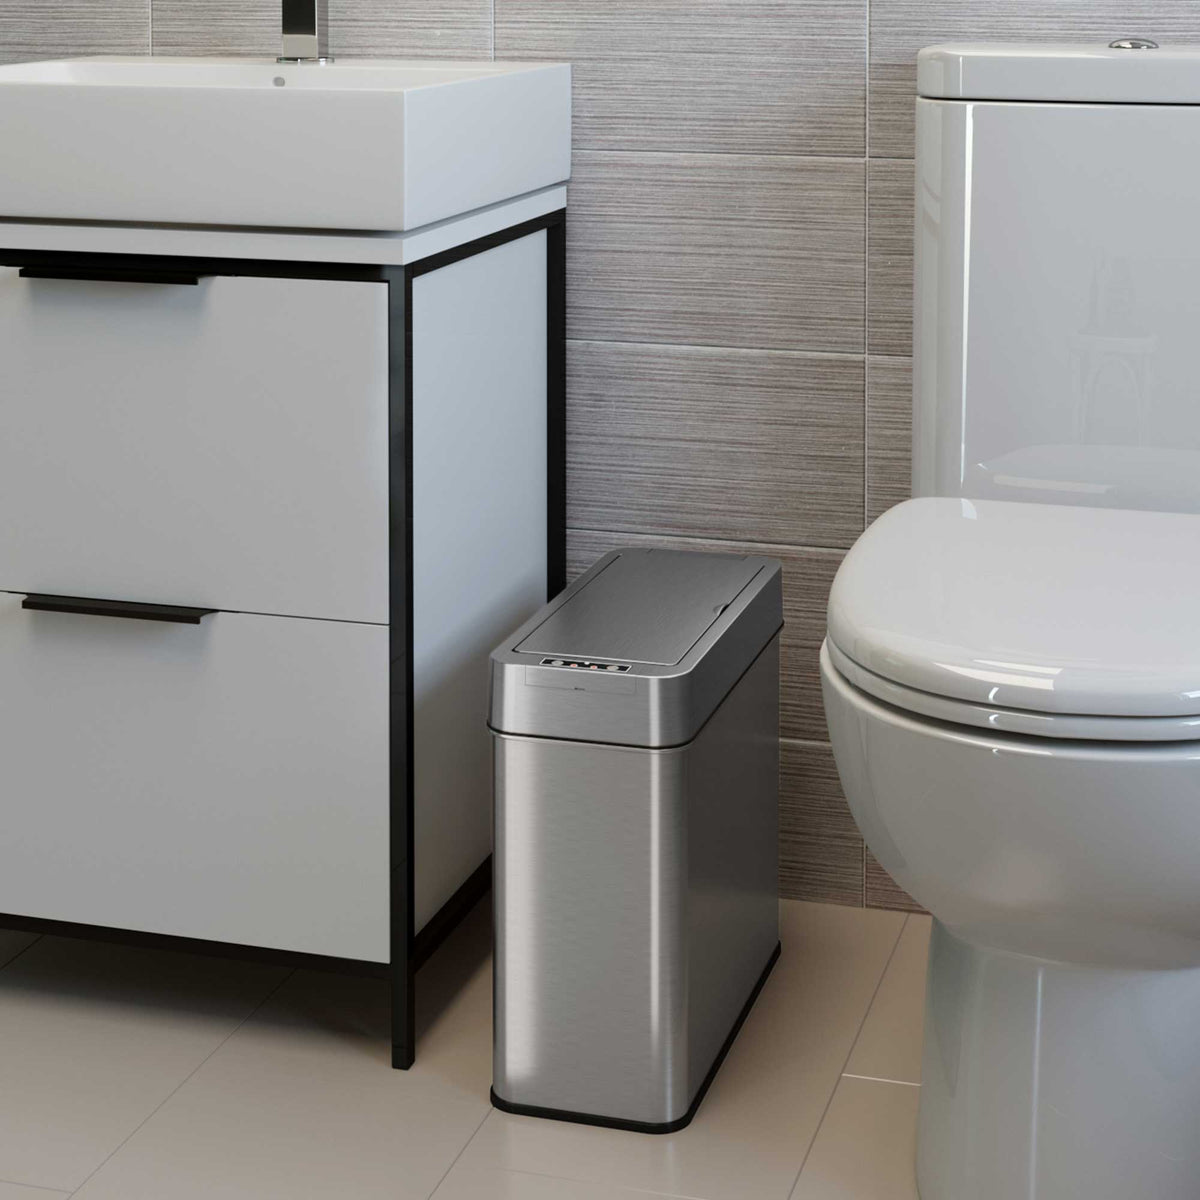 4 Gallon Stainless Steel Slim Sensor Trash Can (Left Side Lid Open) in bathroom